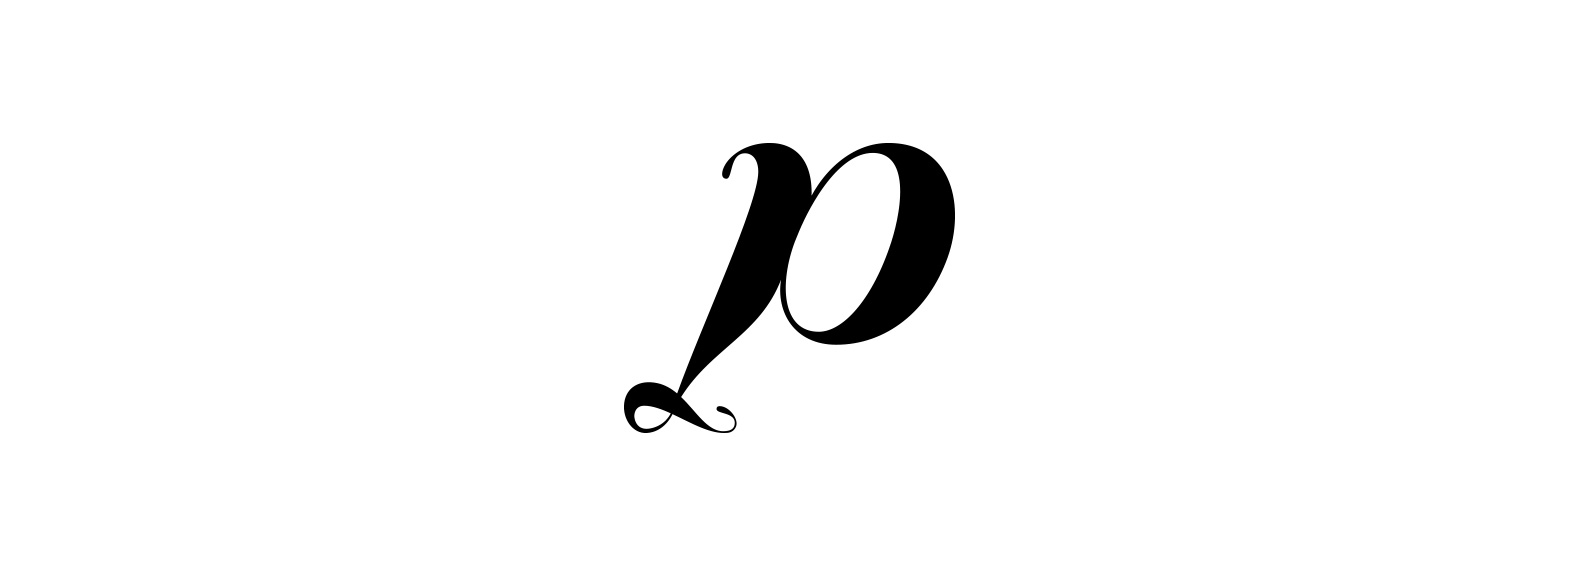 ponio logo 2